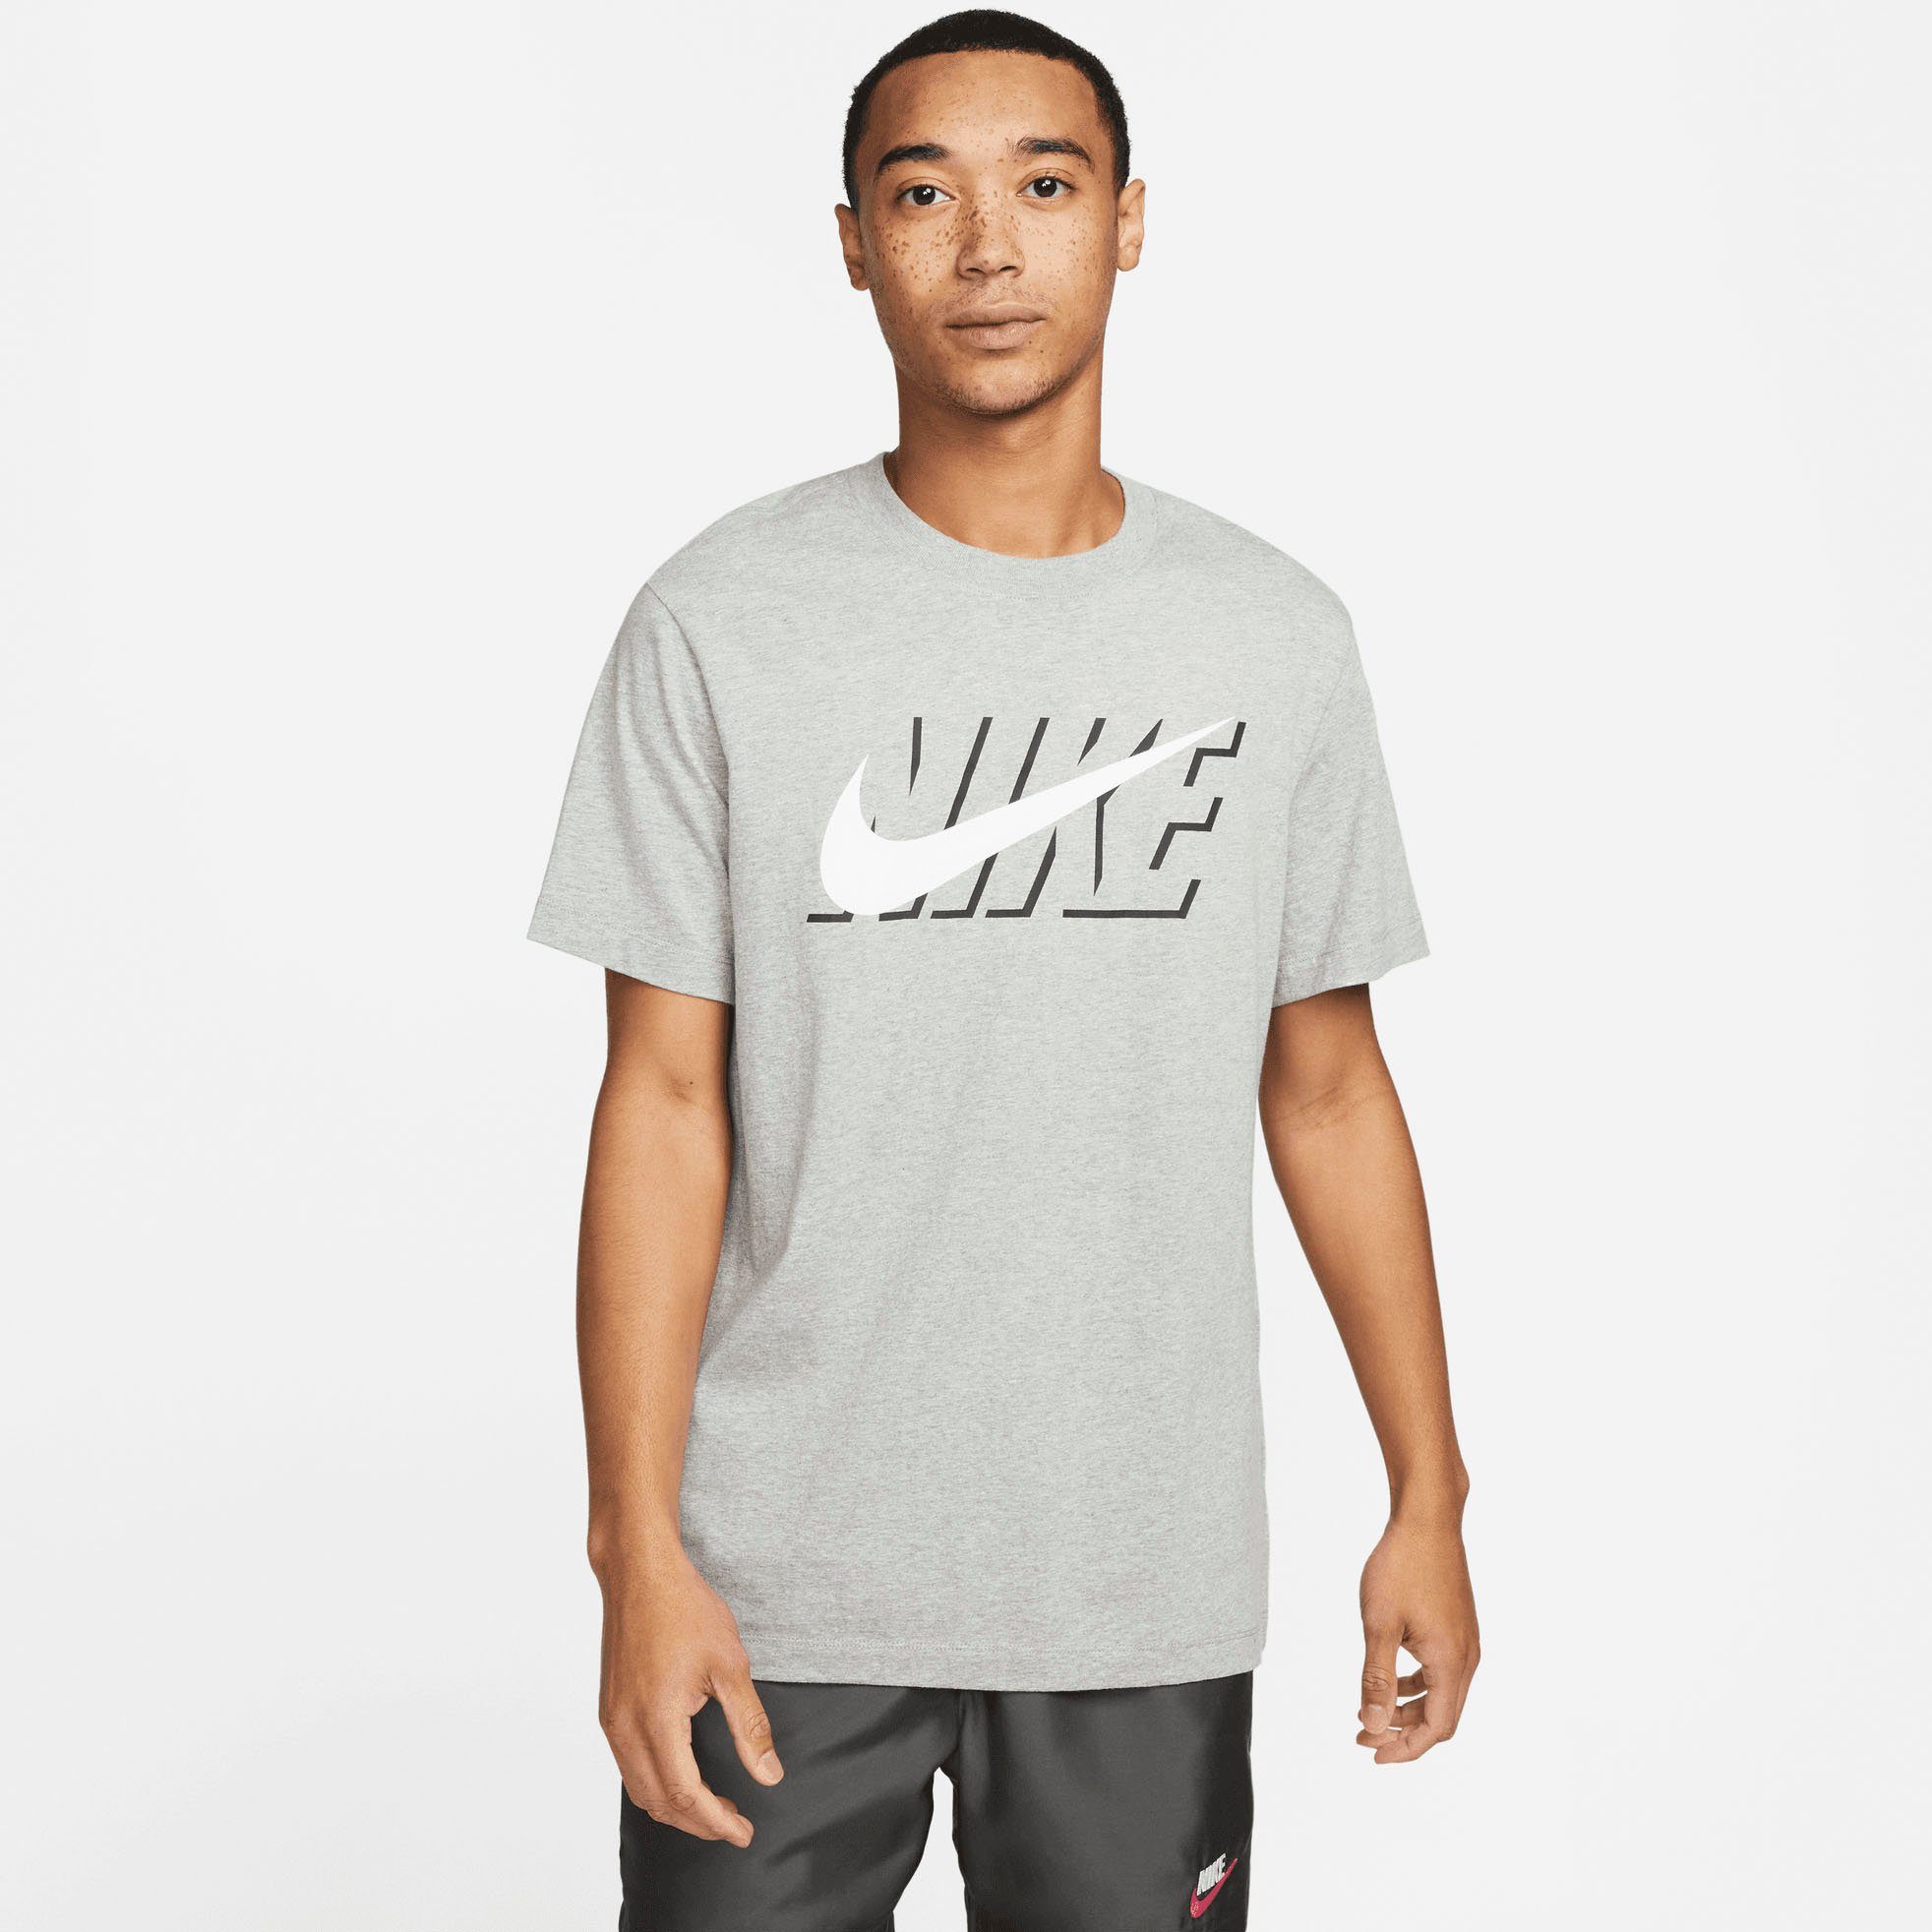 Nike Men's T-Shirt T-Shirt DK HEATHER Sportswear GREY